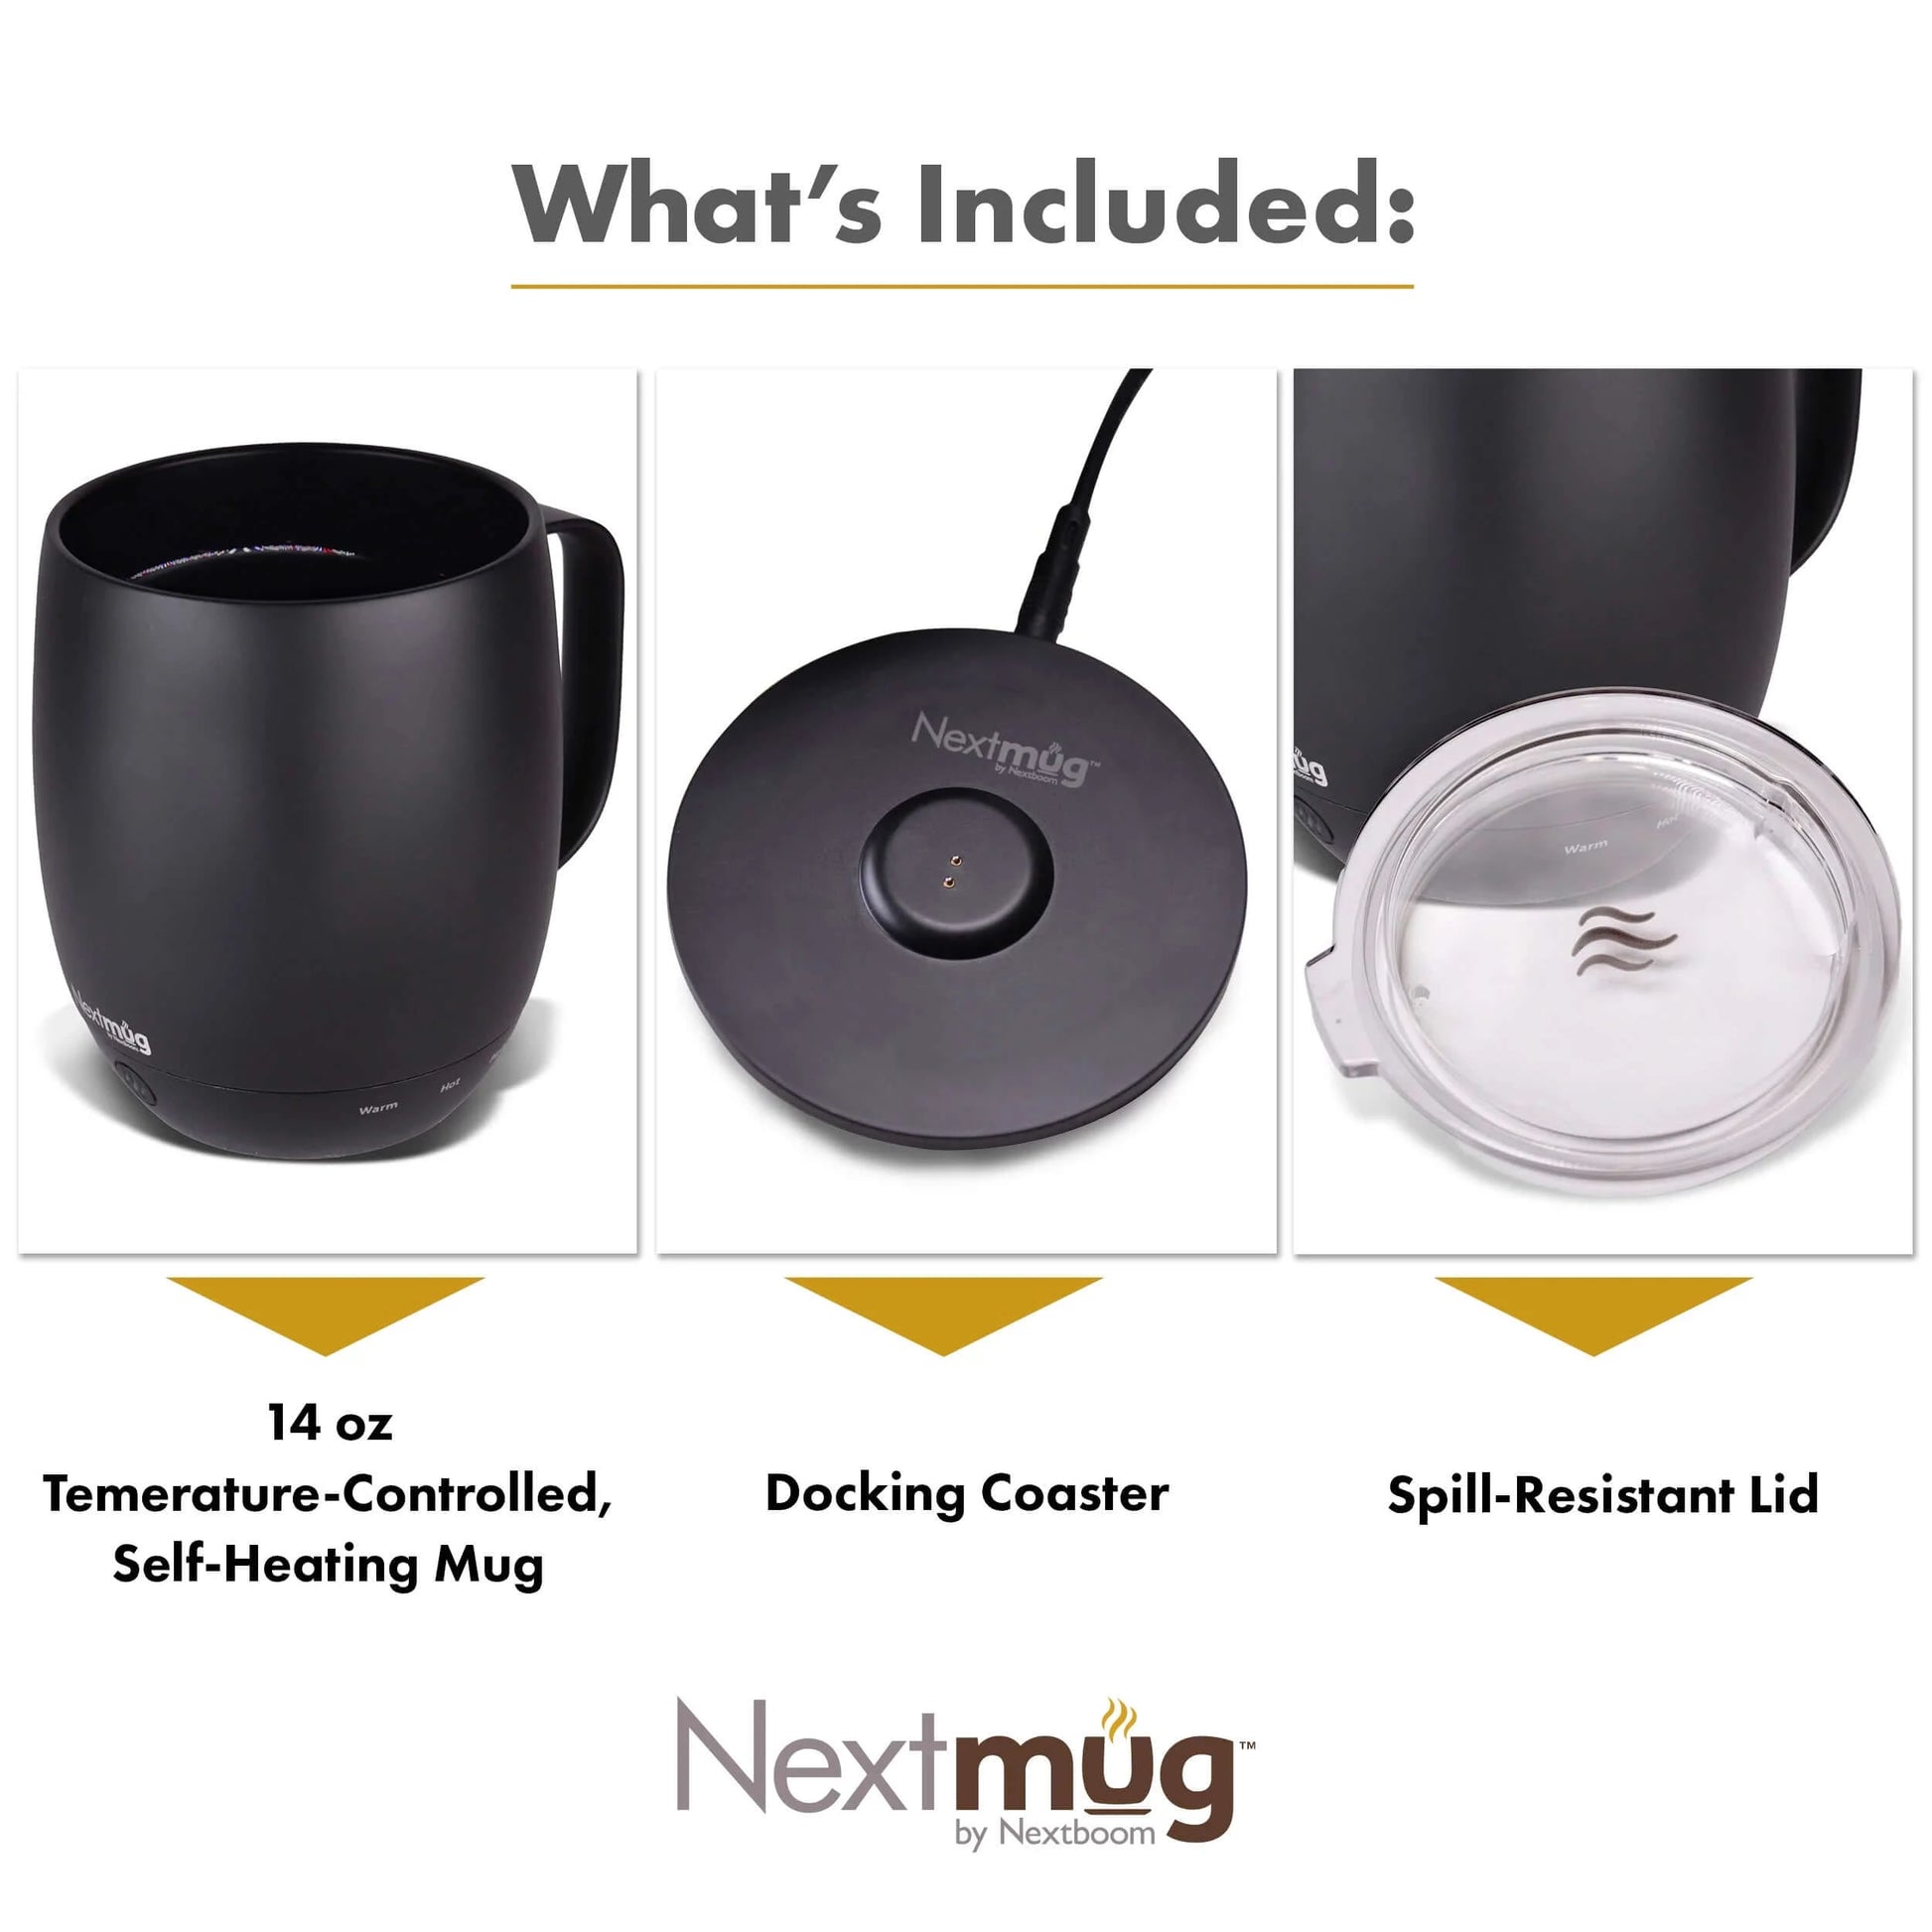 Ember Mug 2 - Self-Heating Ceramic Smart Mug - 14 oz.